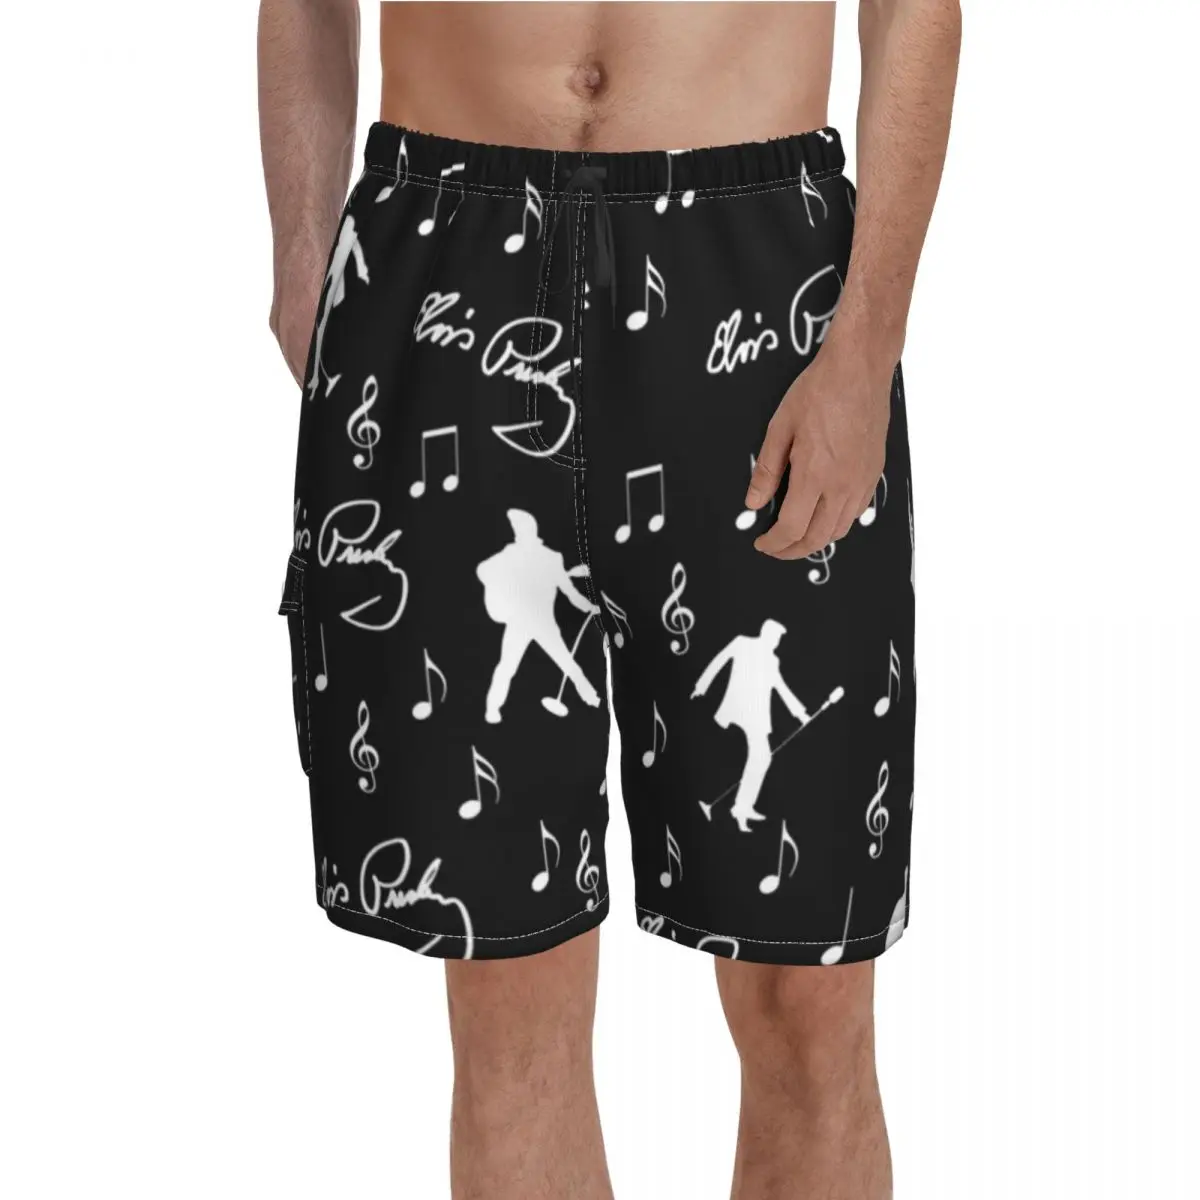 Elvis Presley Board Shorts Music Pattern Pattern Beach Short Pants Man Printed Large Size Swimming Trunks Gift Idea